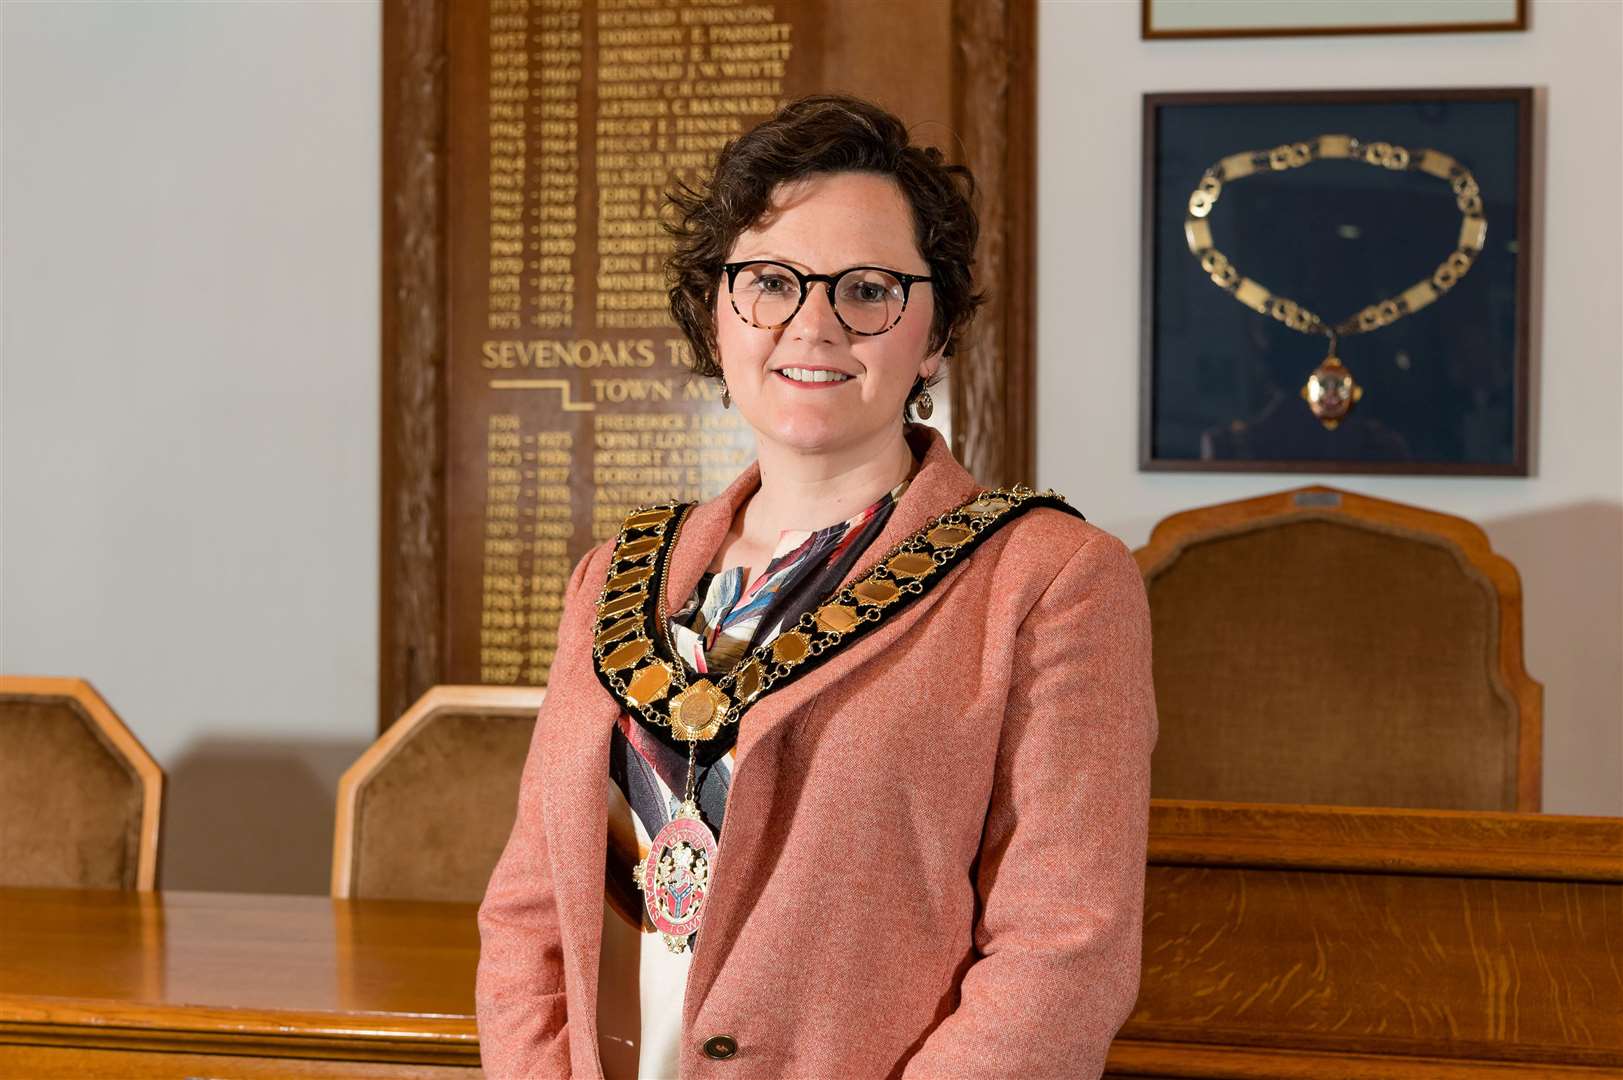 Sevenoaks Town Mayor, Cllr Claire Shea